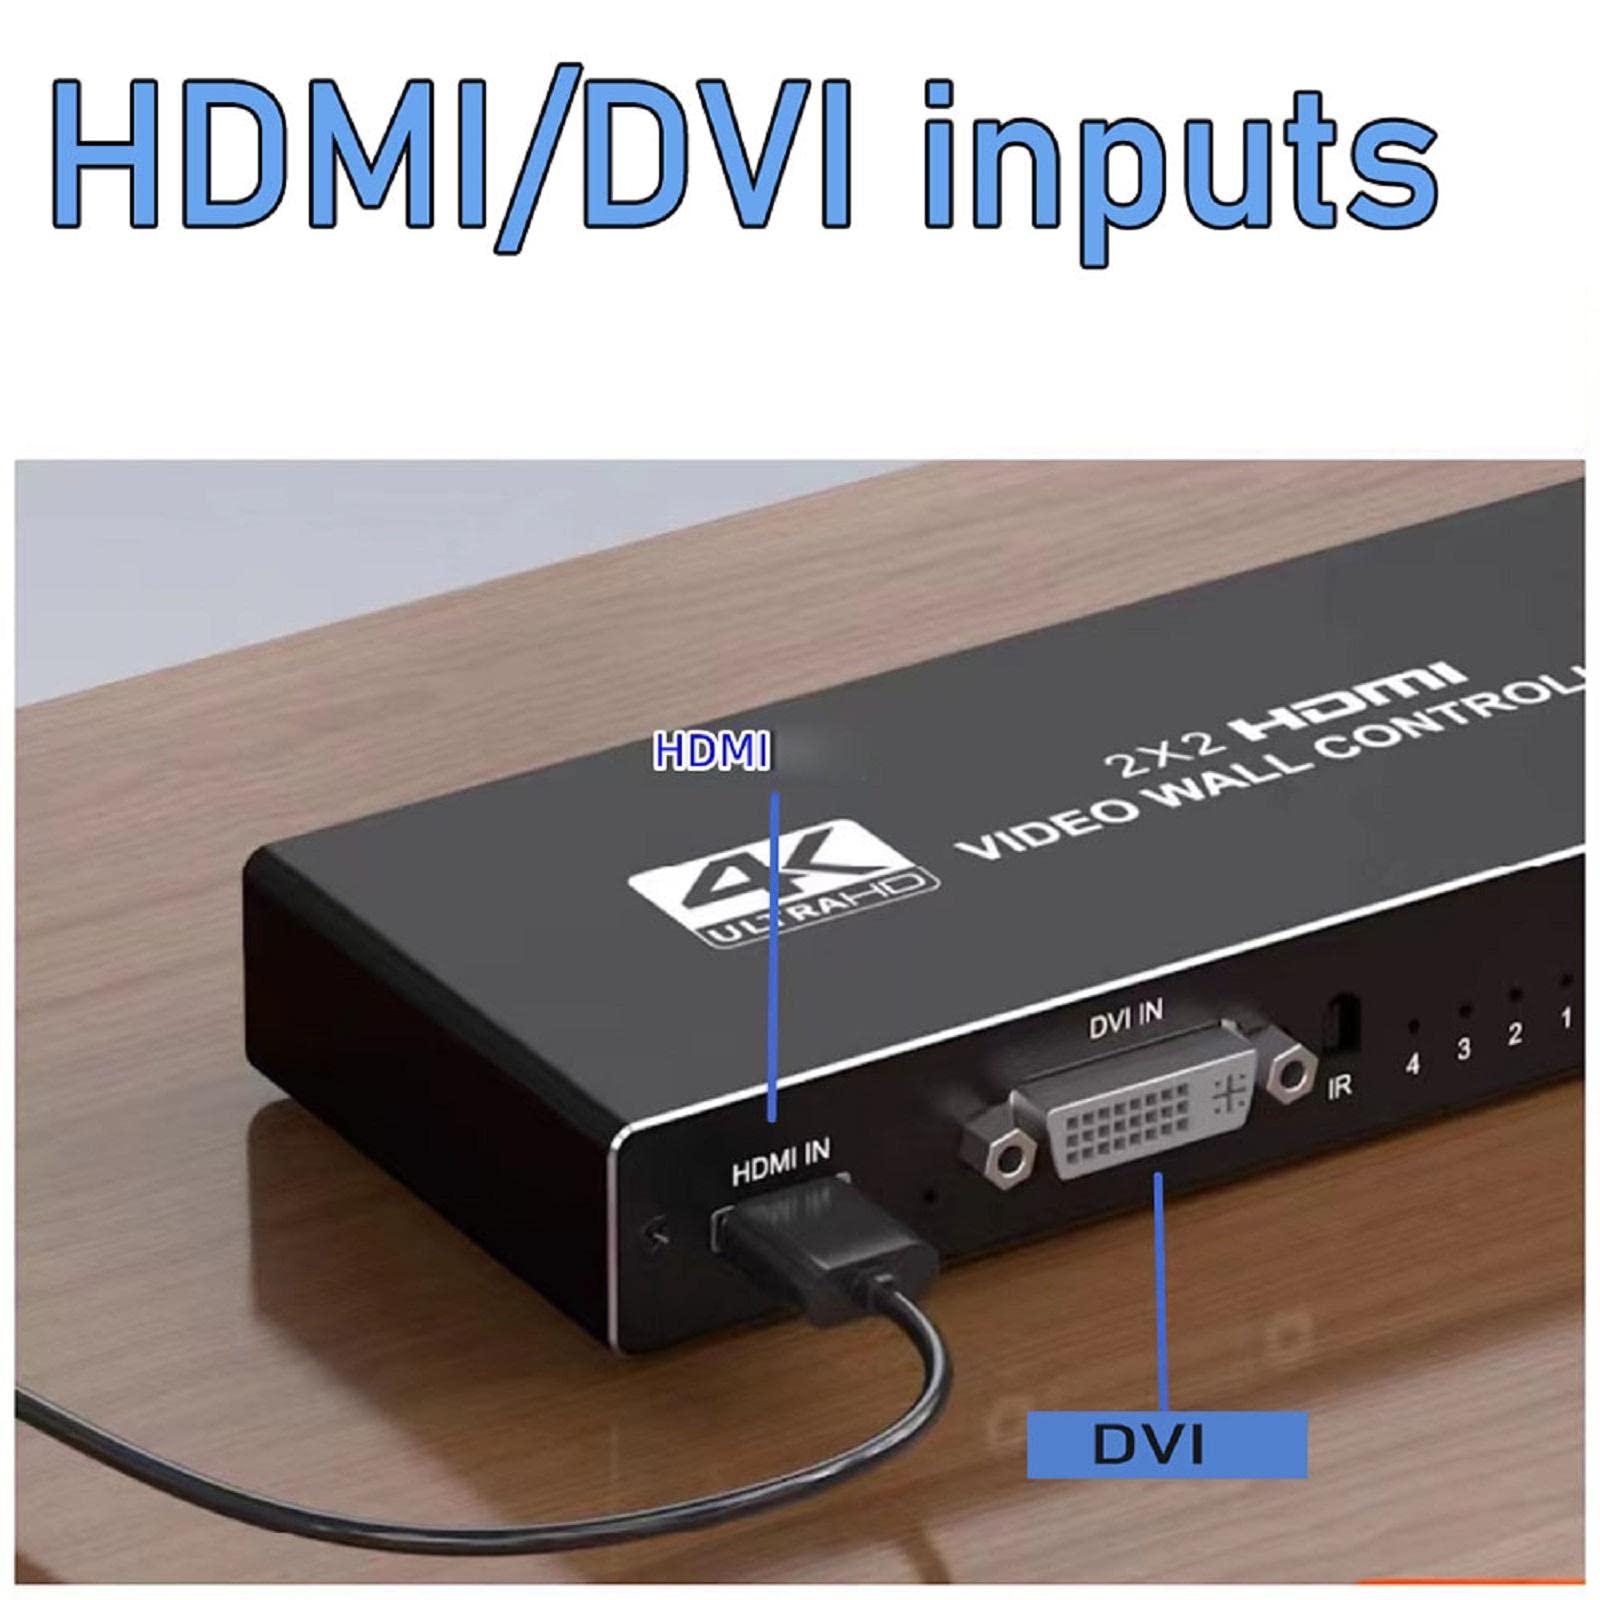 MOUDOAUER 4K 2x2 Video Wall Controller Matrix HDMI/DVI Input 1080P 60Hz Multi Screen Stitching Processor Splicer 1X2 1X4 1X3 2X1 3x1 4X1